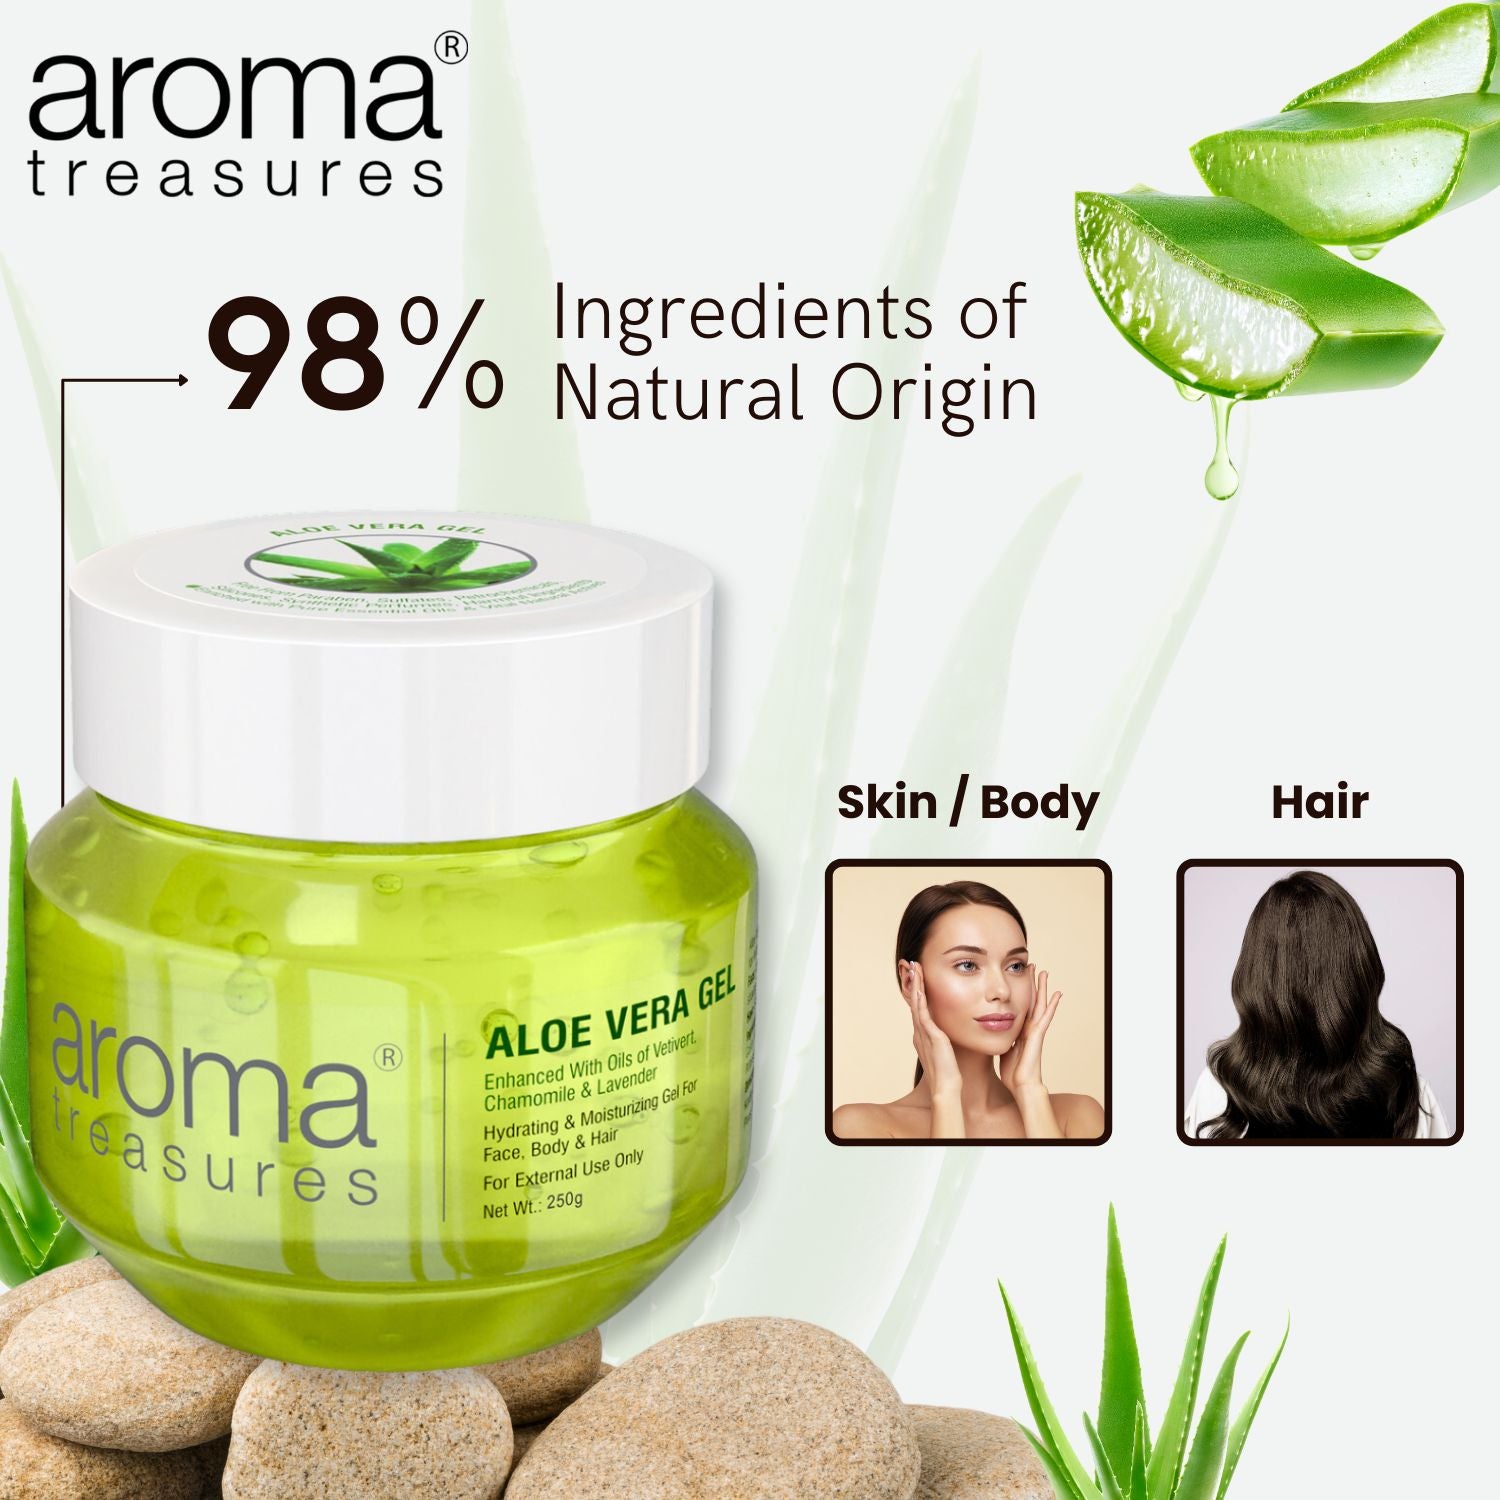 Aroma Treasures Aloe Vera Gel (Hydrating & Moisturizing Gel For Face, Body & Hair) - 250g